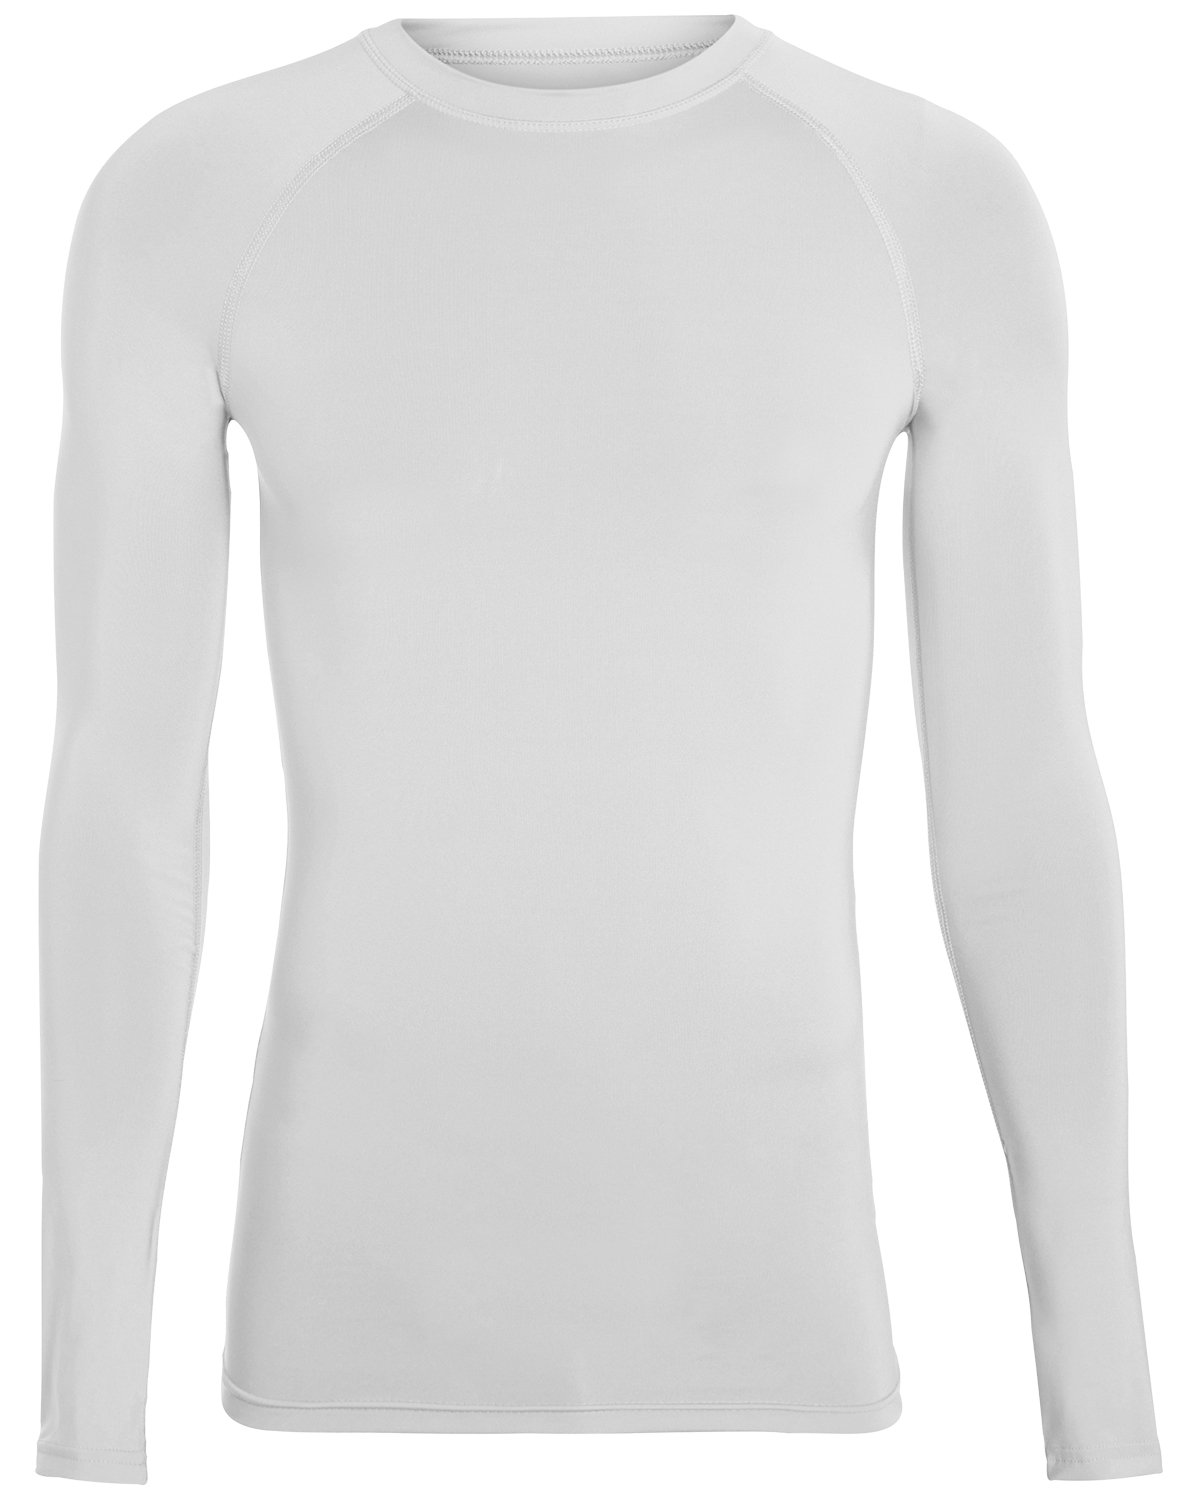 Adult Hyperform Long-Sleeve Compression Shirt-Augusta Sportswear